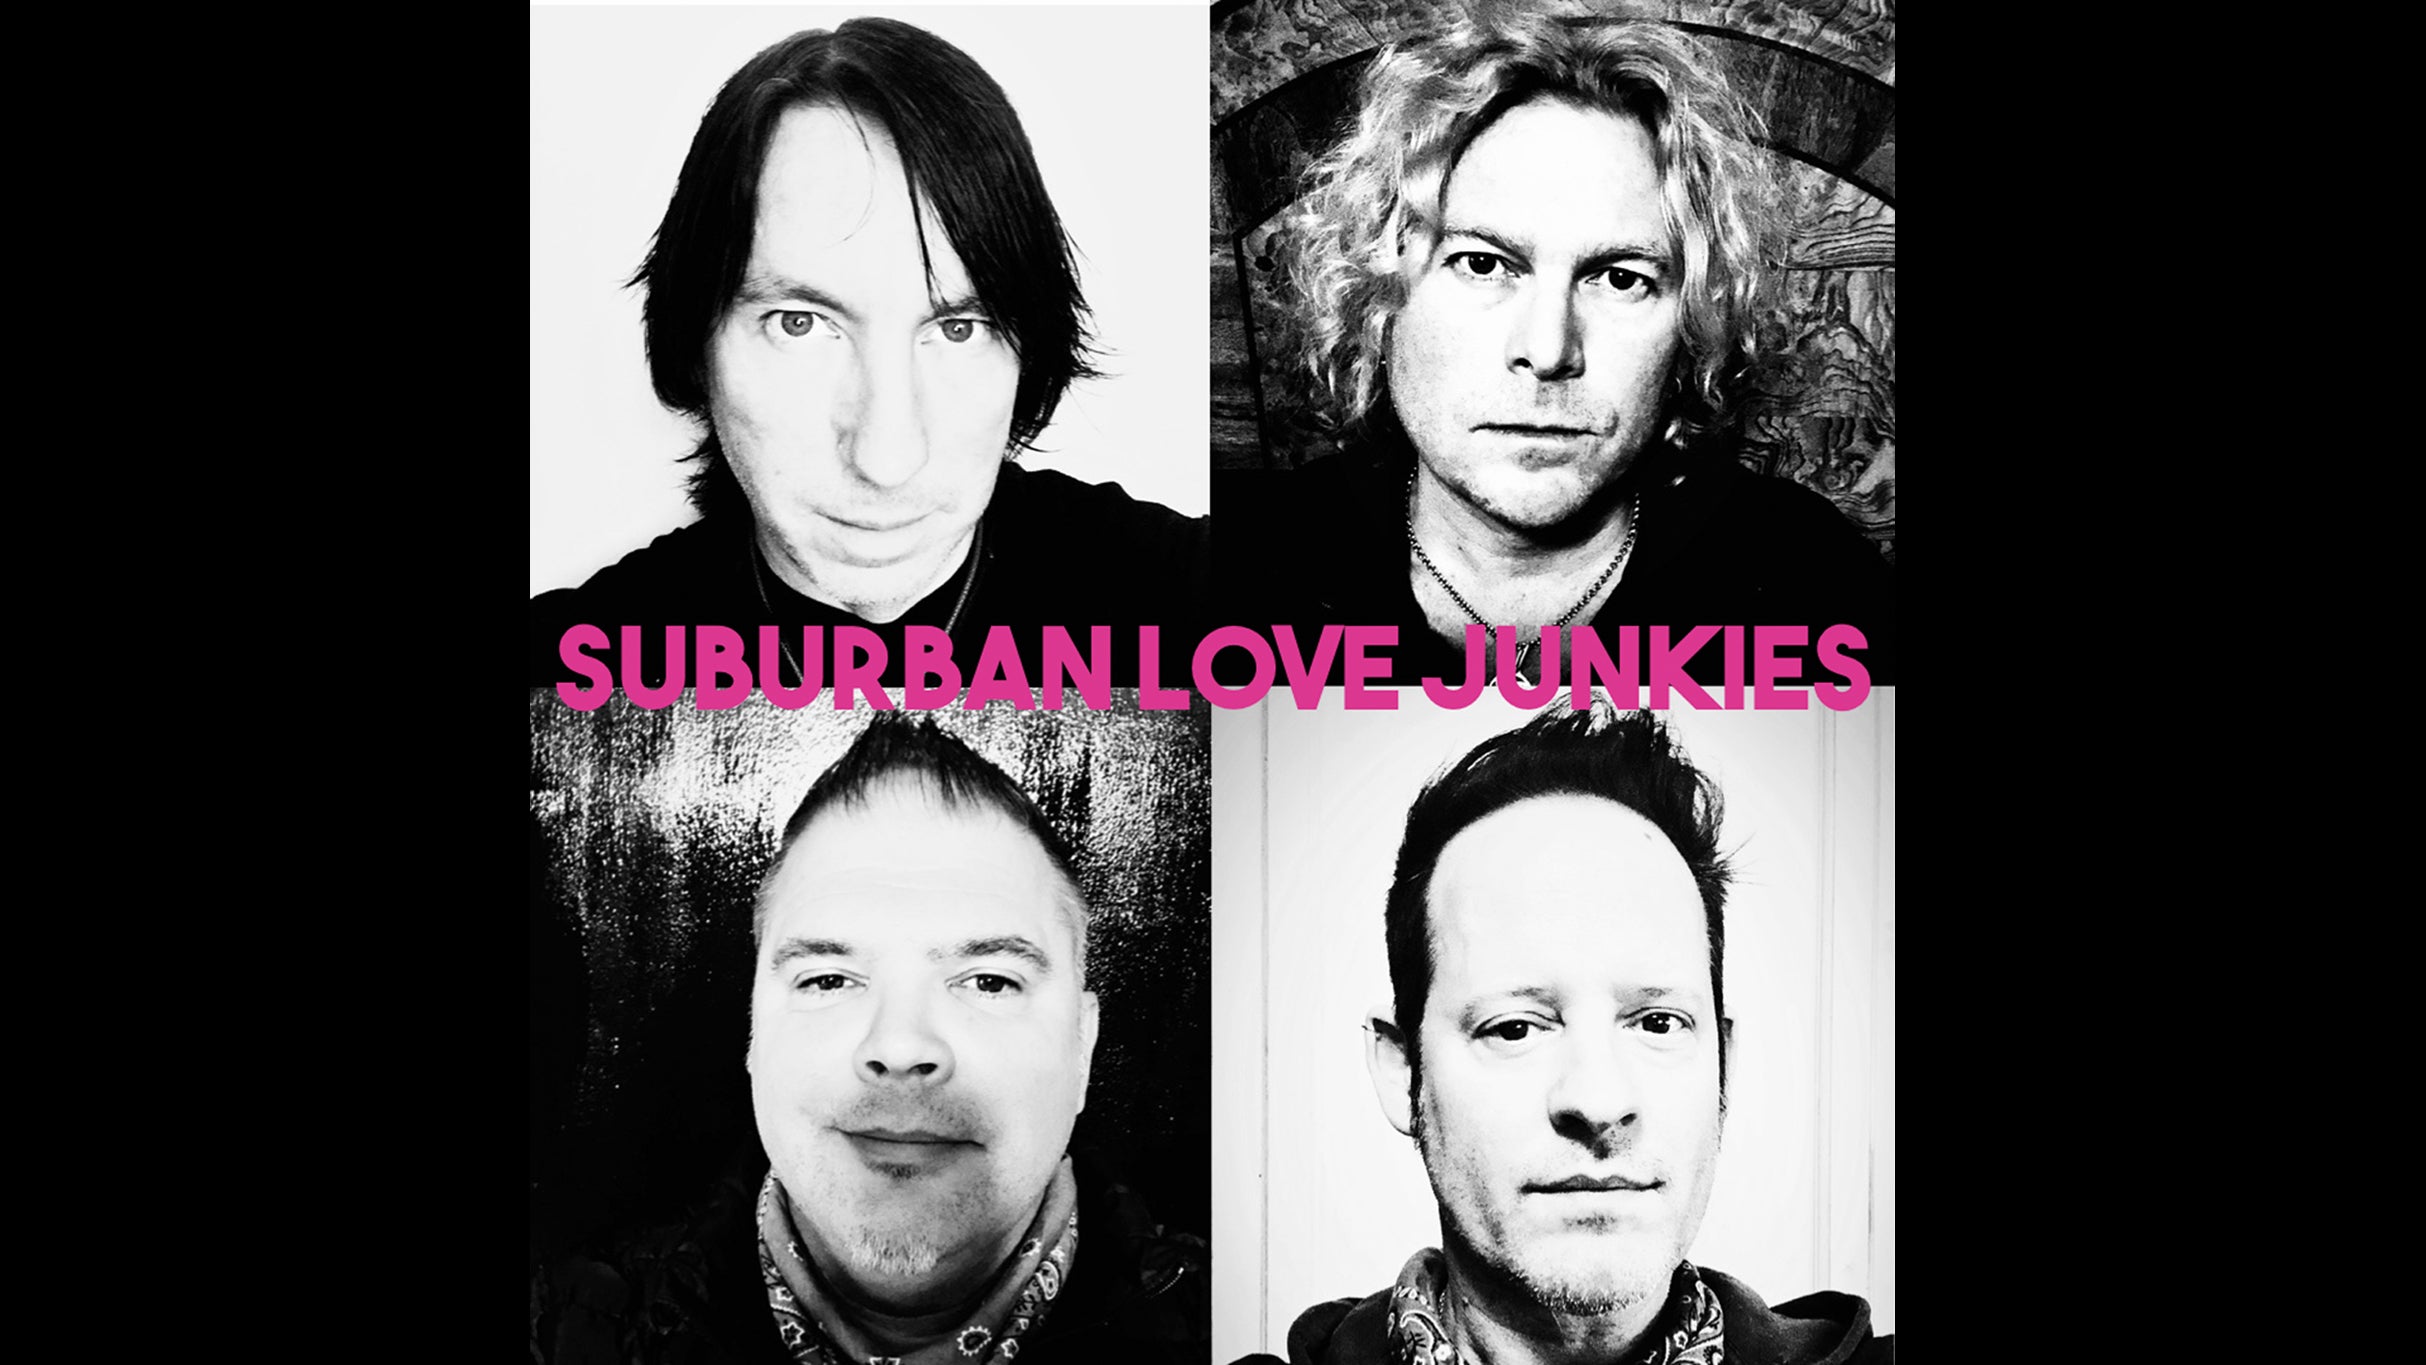 Suburban Love Junkies presale information on freepresalepasswords.com